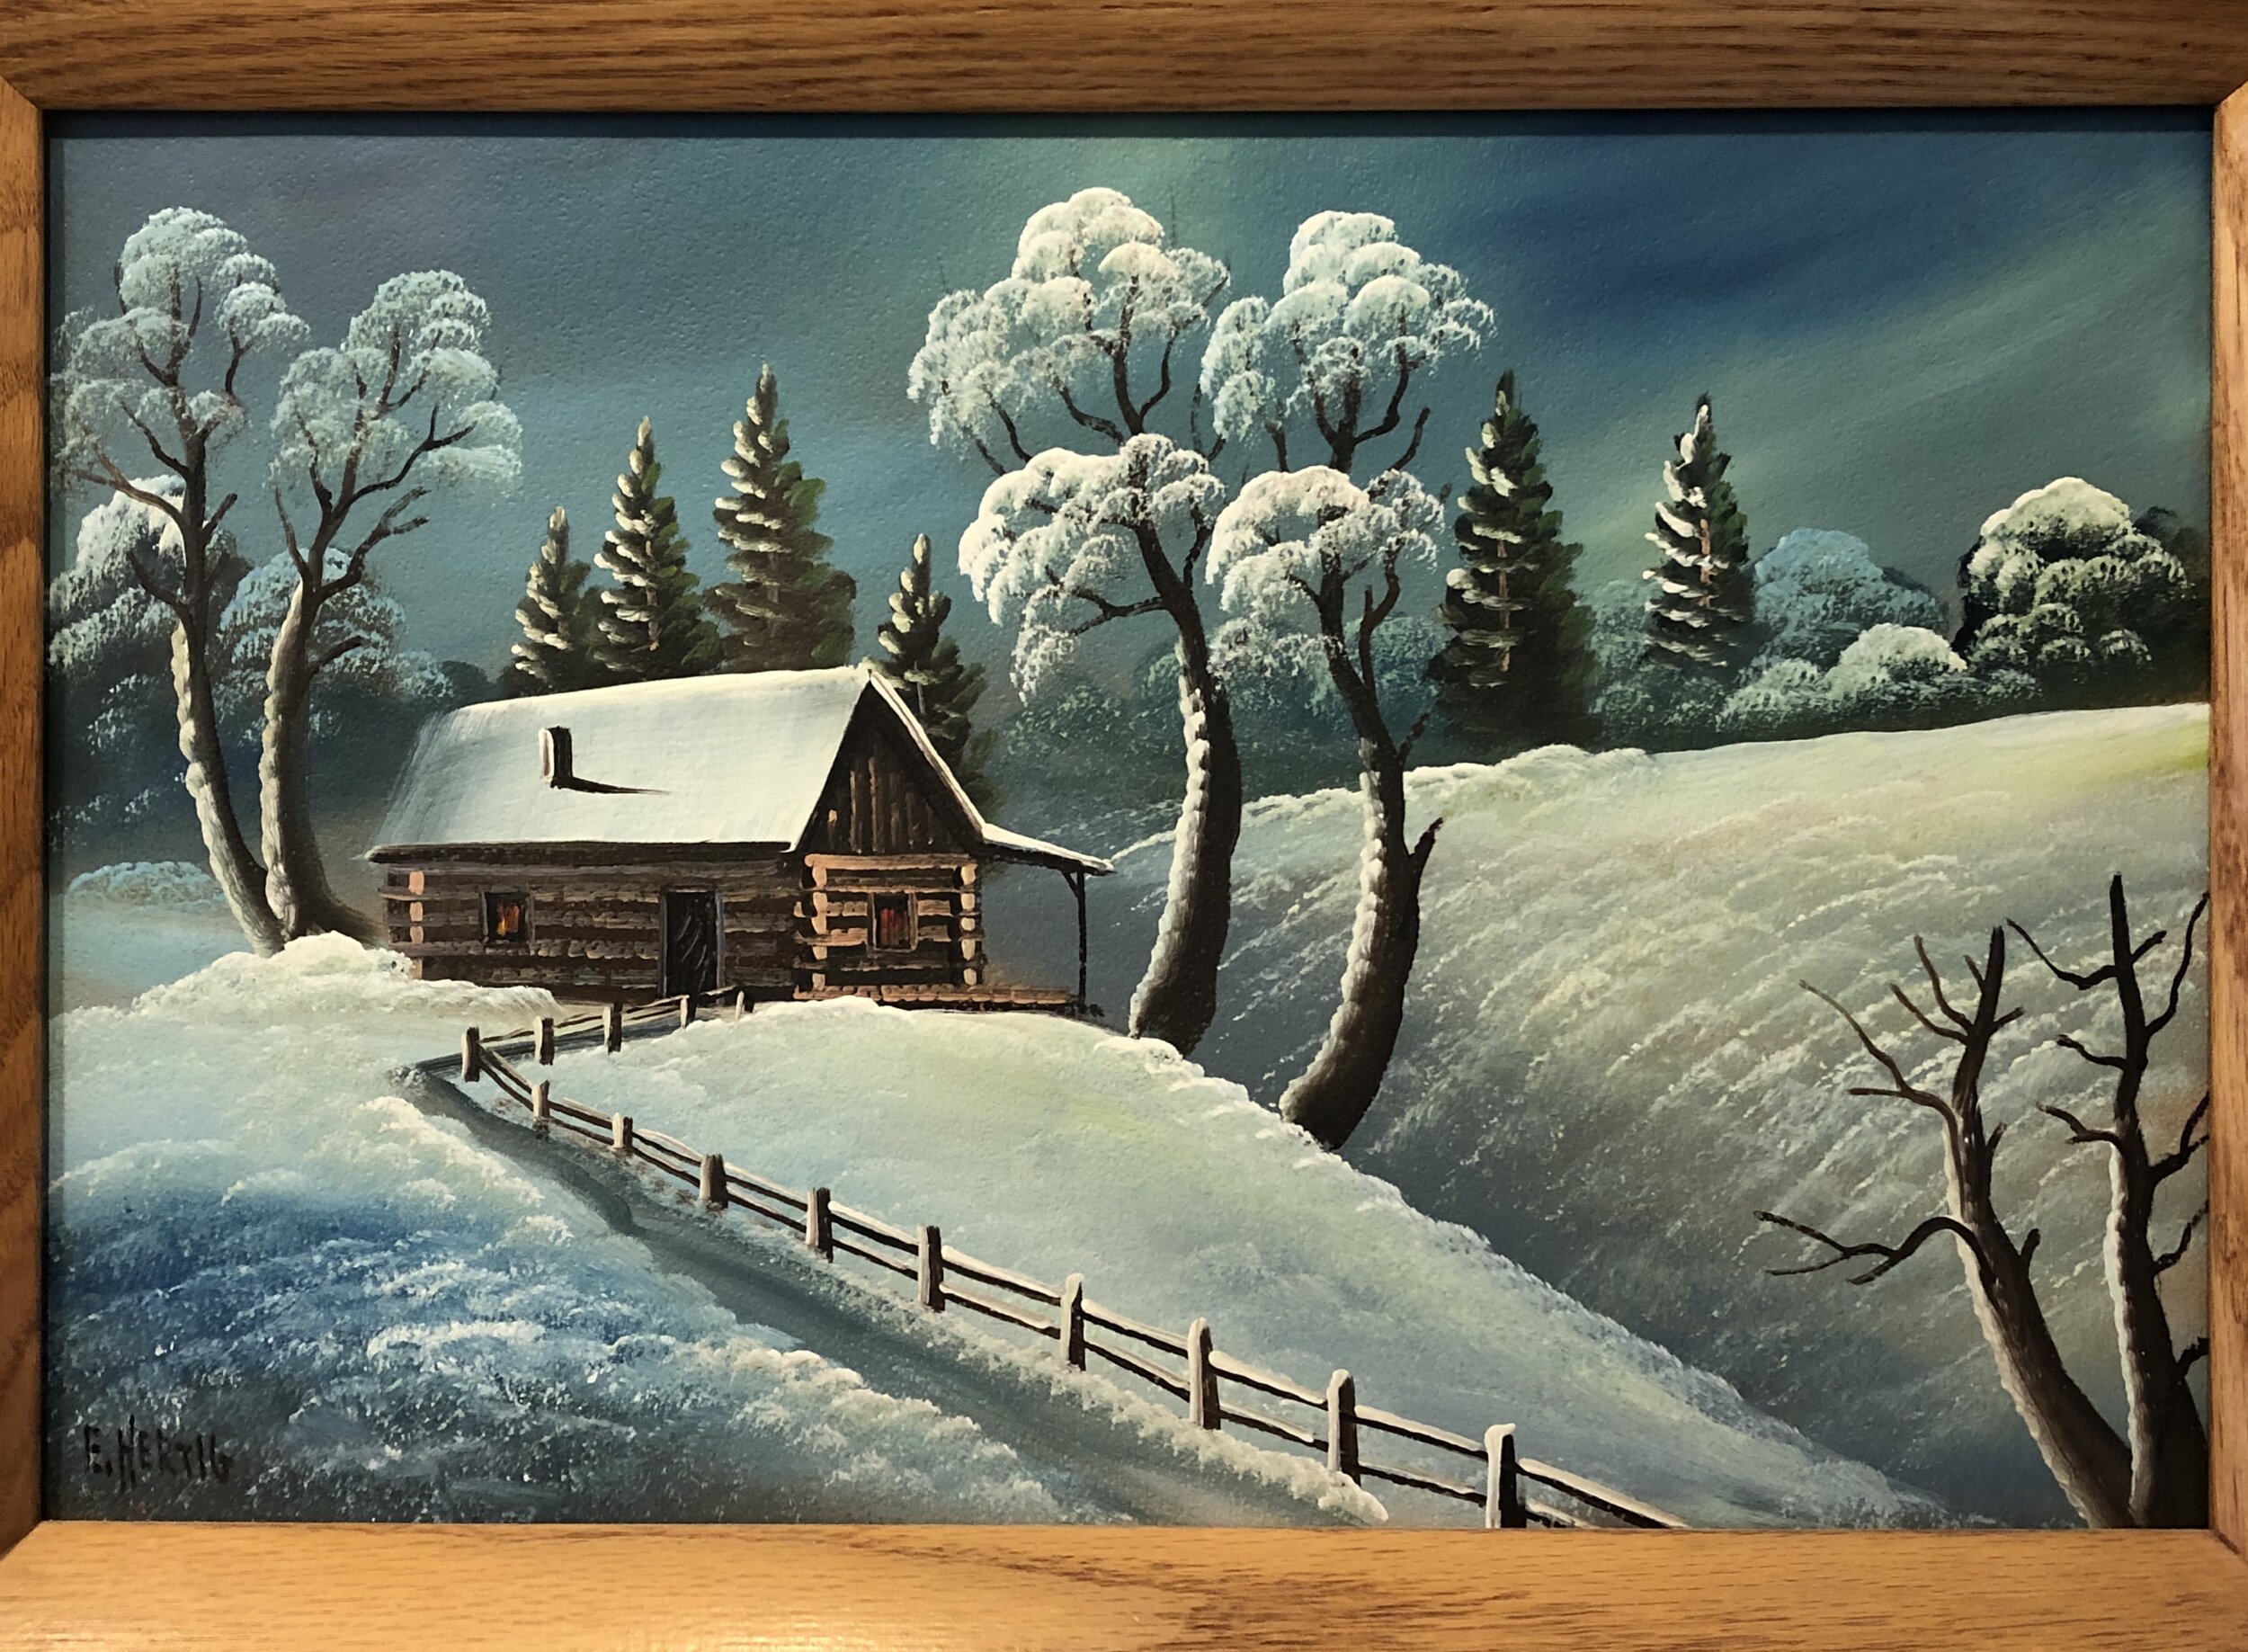 "Snowy Cabin" by Ernest Hertig